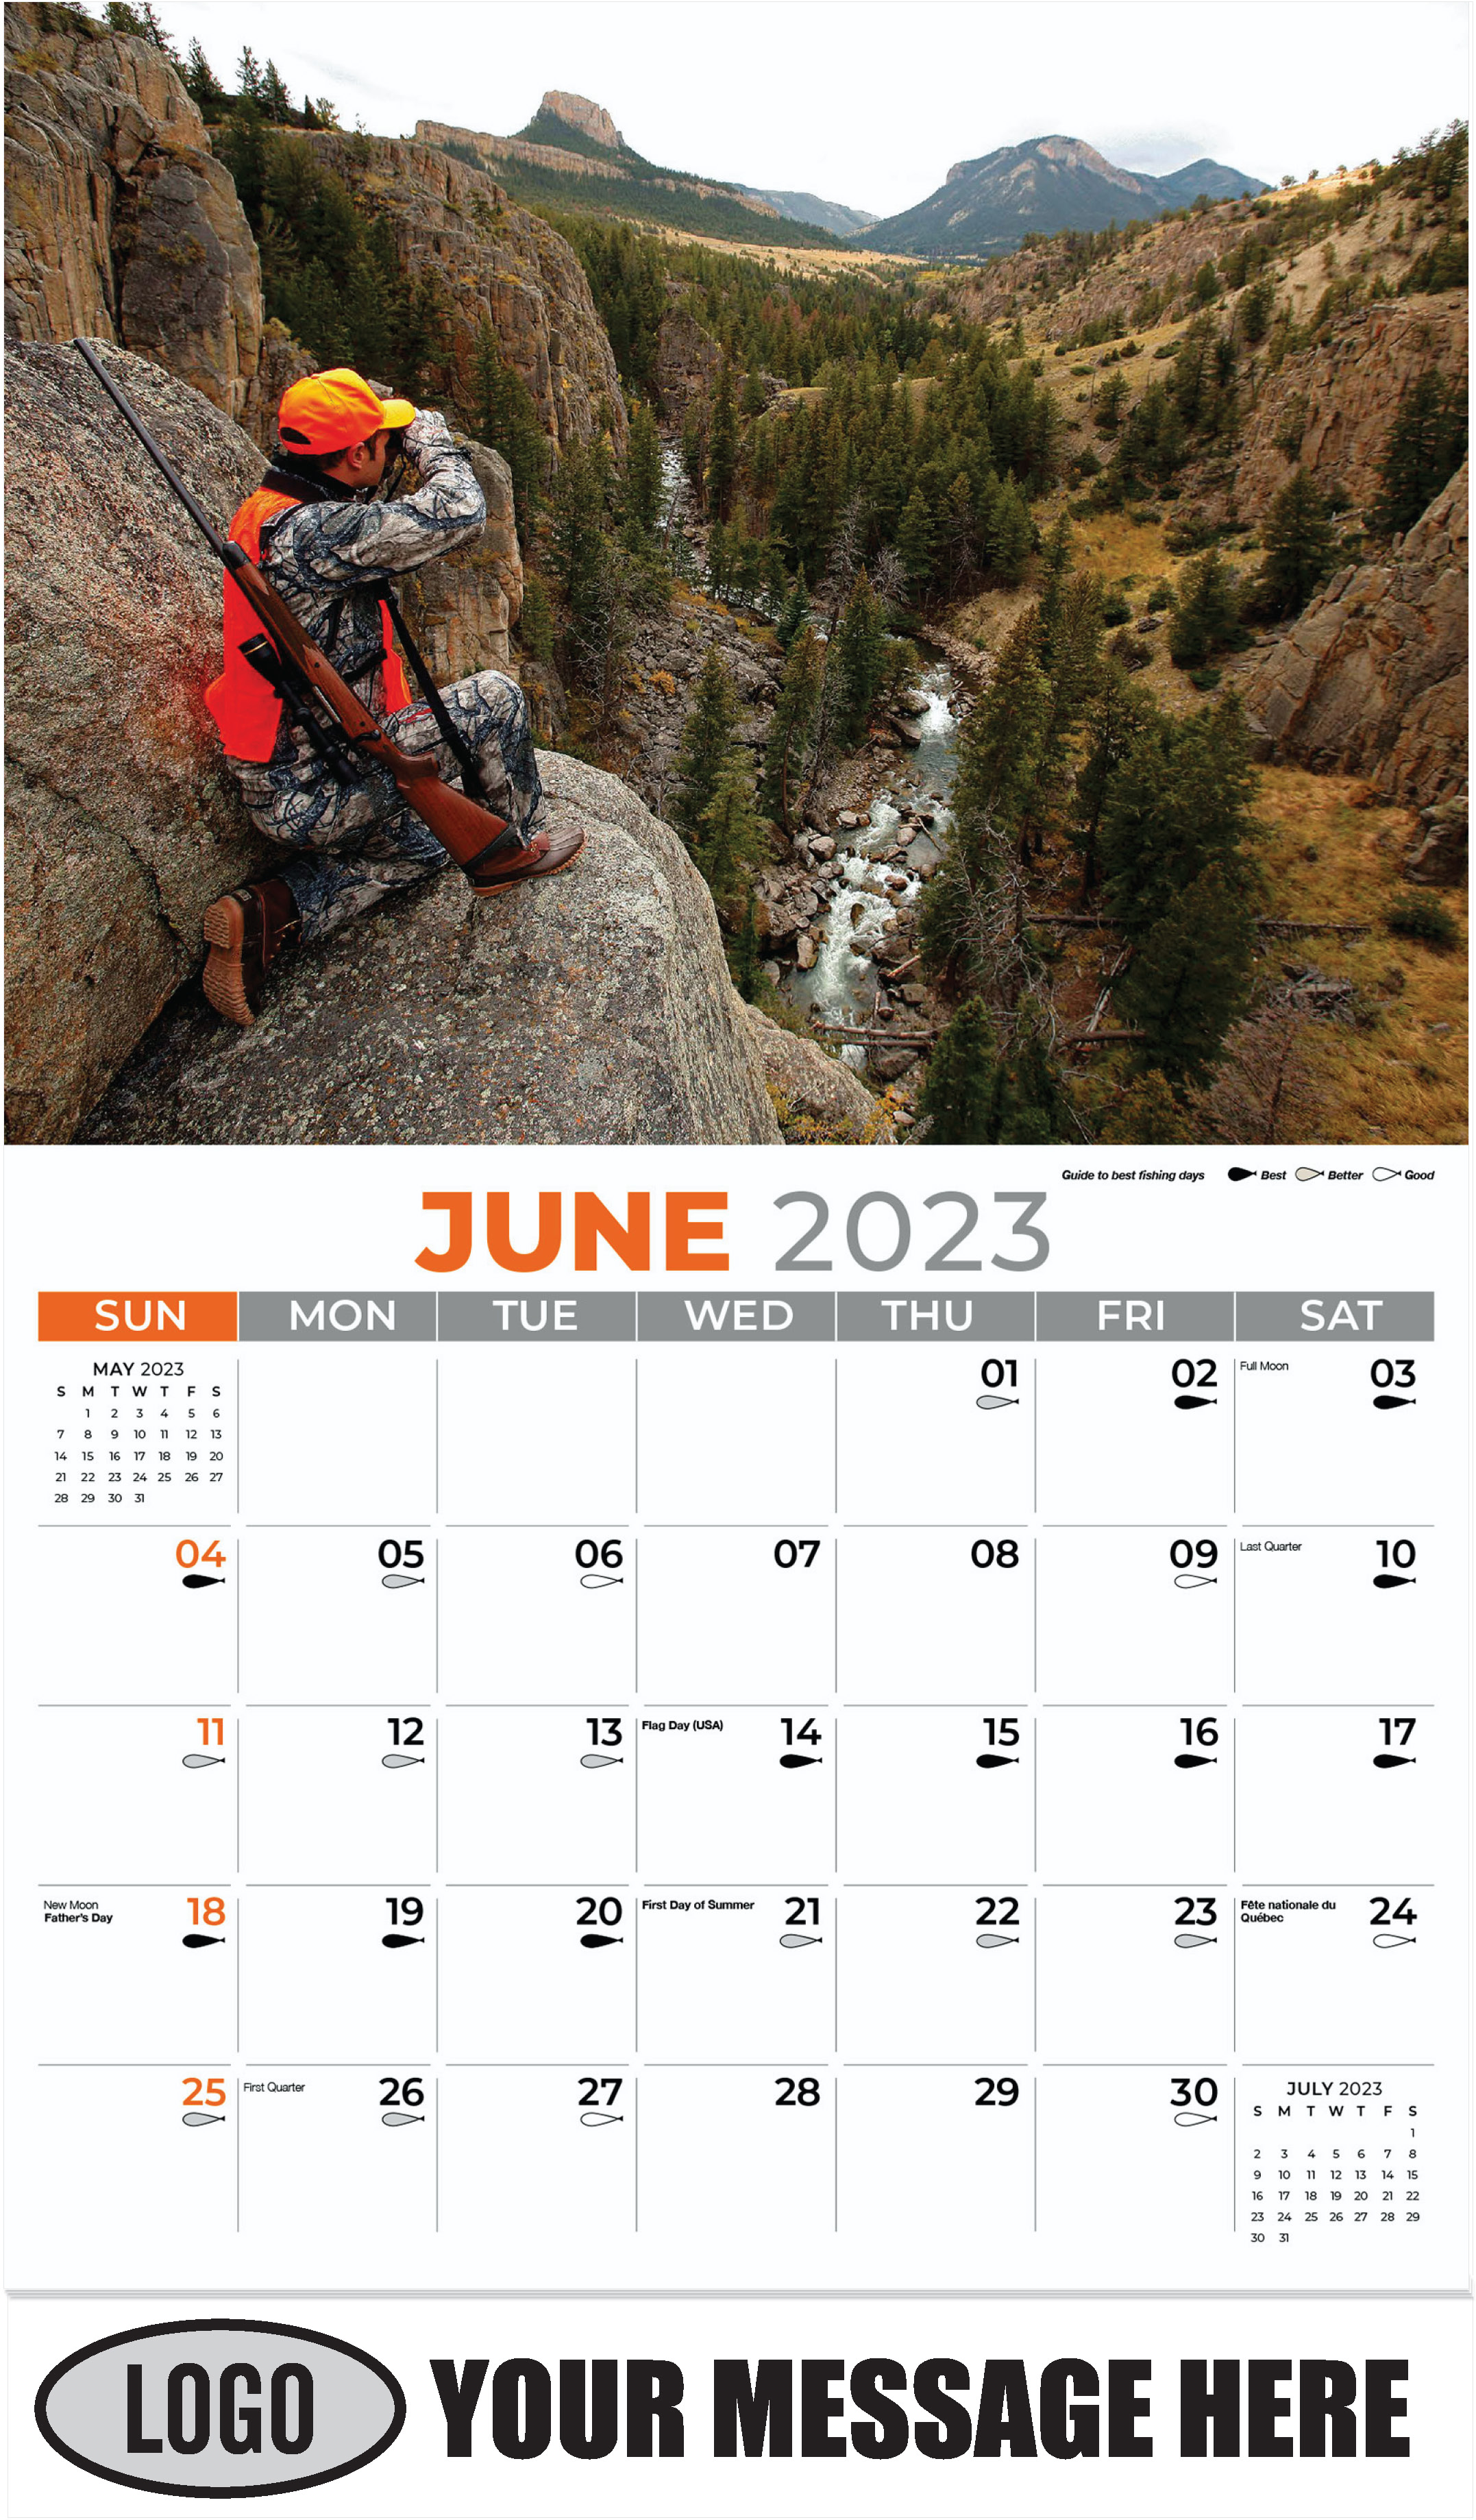 June - Fishing & Hunting 2023 Promotional Calendar